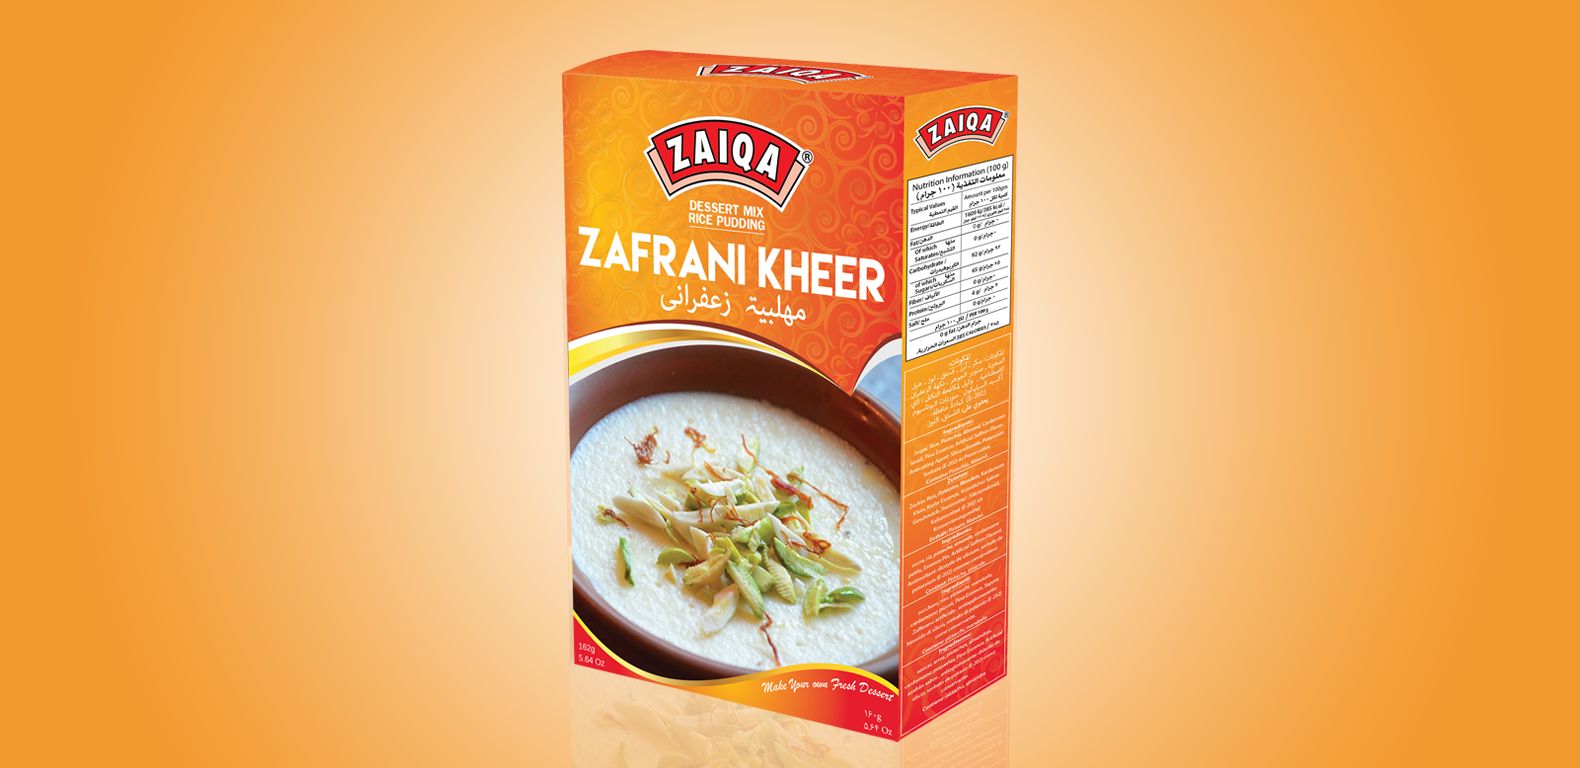 Packaging-Design-Zaiqa-Desserts-Zafrani-Kheer